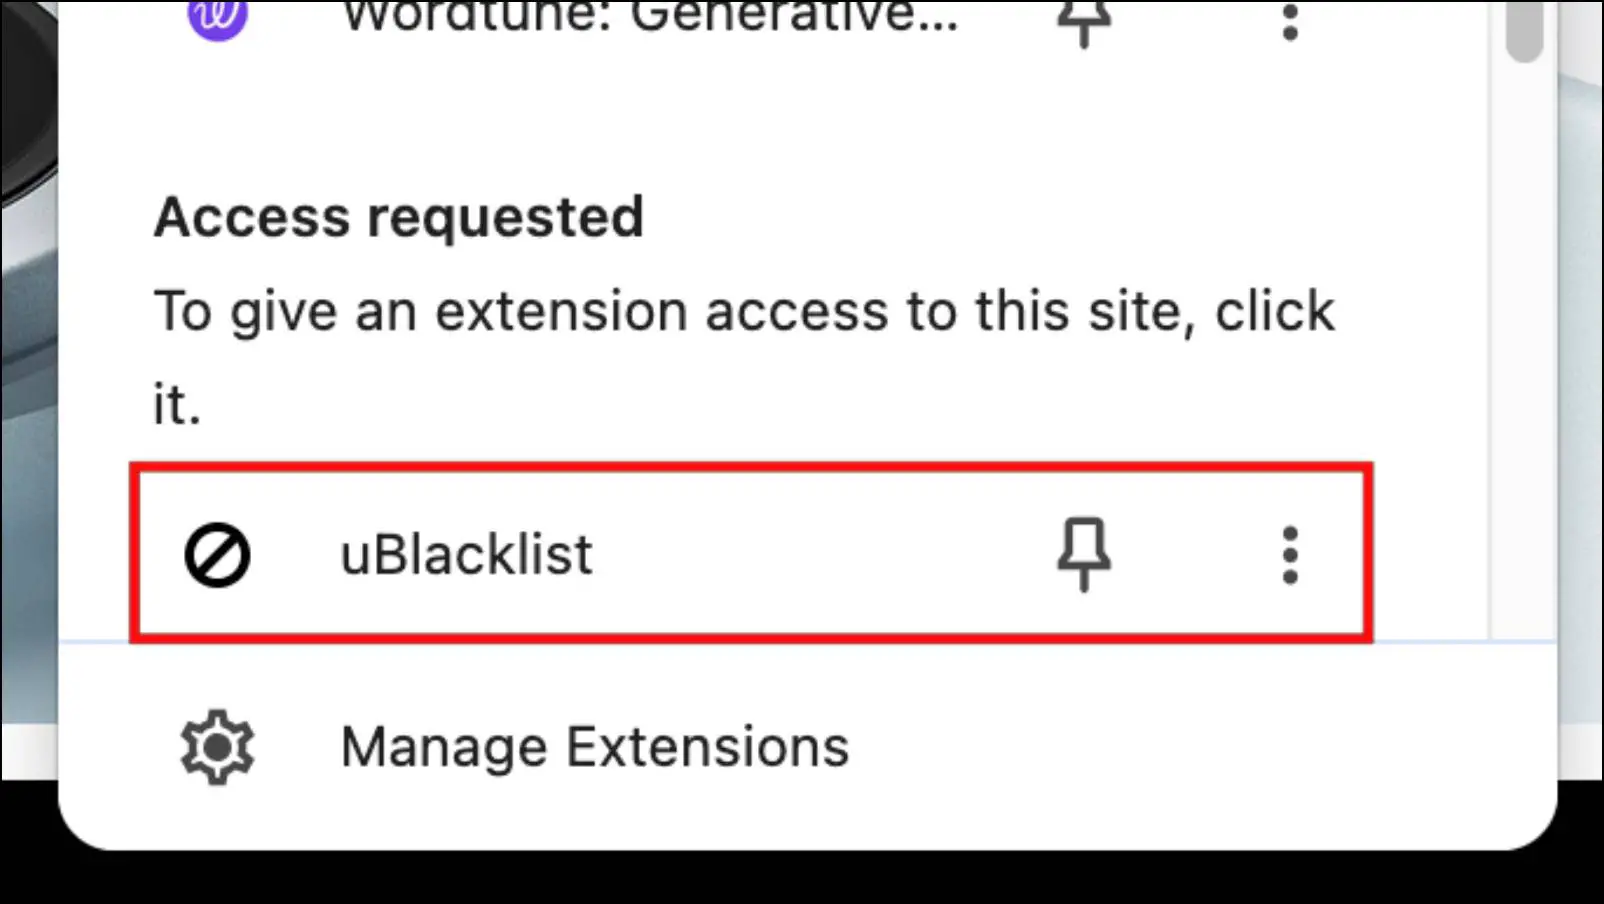 Choosing the uBlacklist Extension